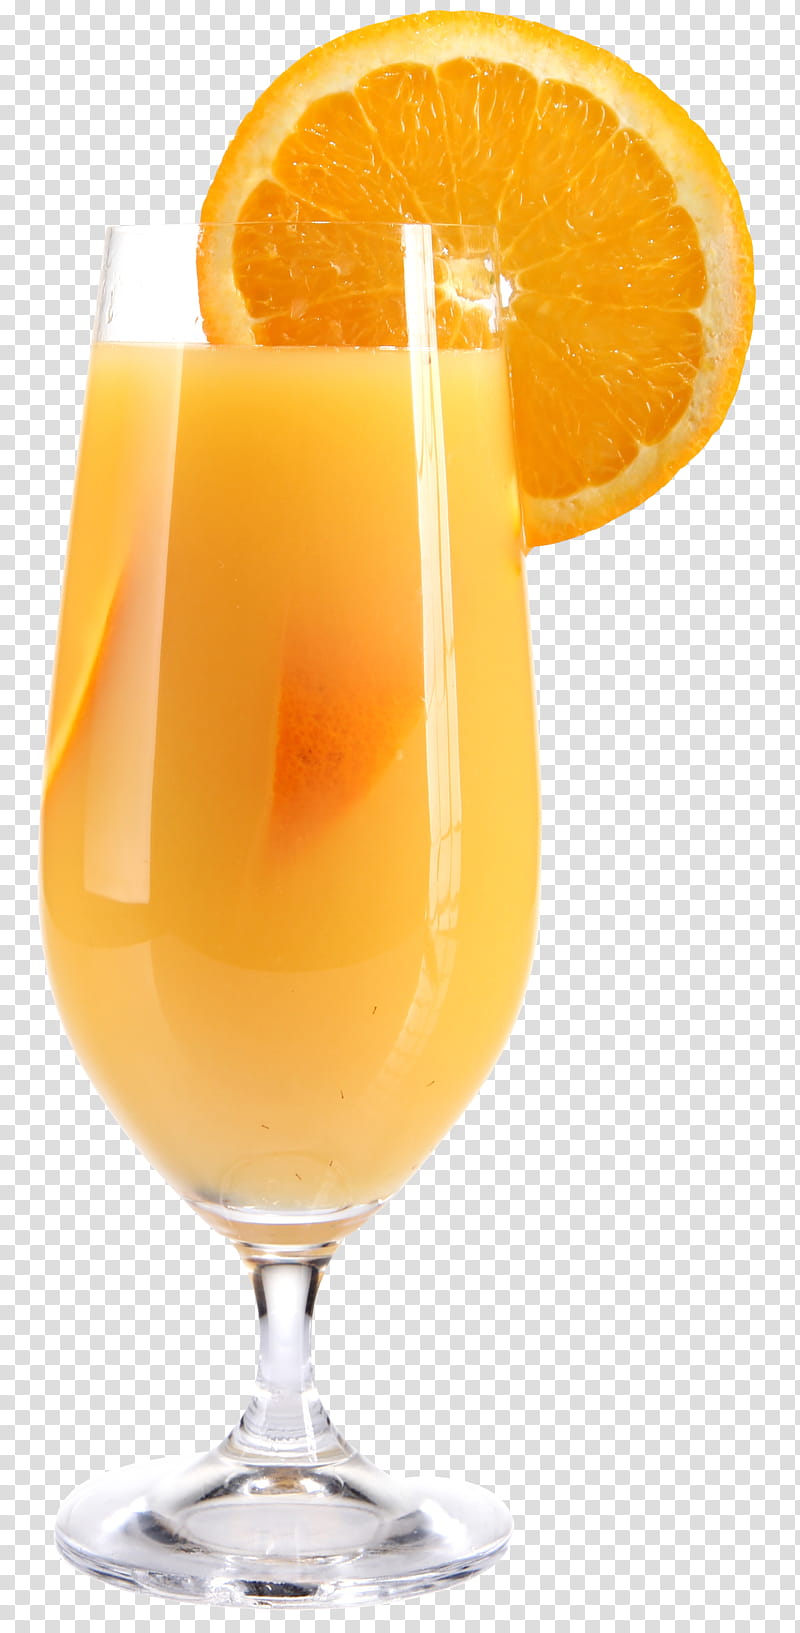 Carrot, Juice, Orange Juice, Screwdriver, Smoothie, Orange Drink, Cocktail, Mimosa transparent background PNG clipart